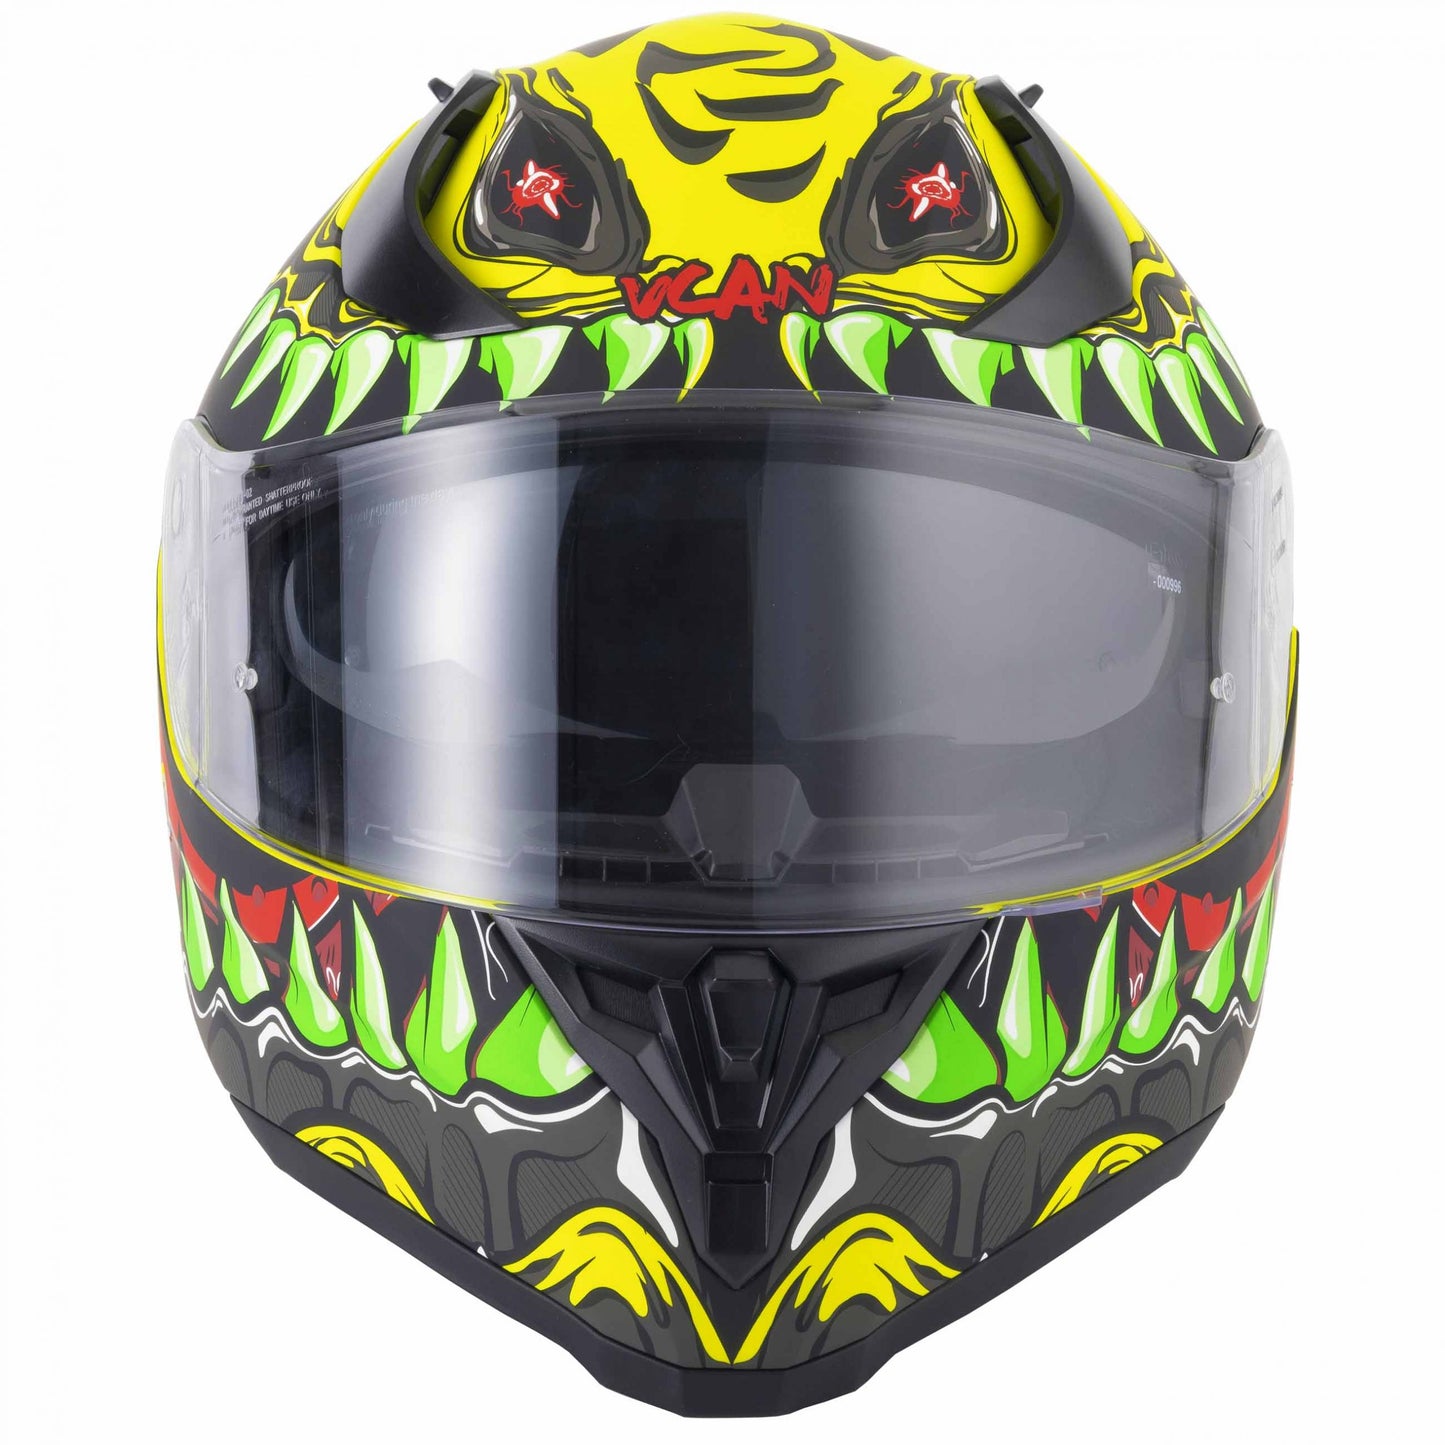 Riderwear |VCAN H128 Full Face Helmet - Titan Wild